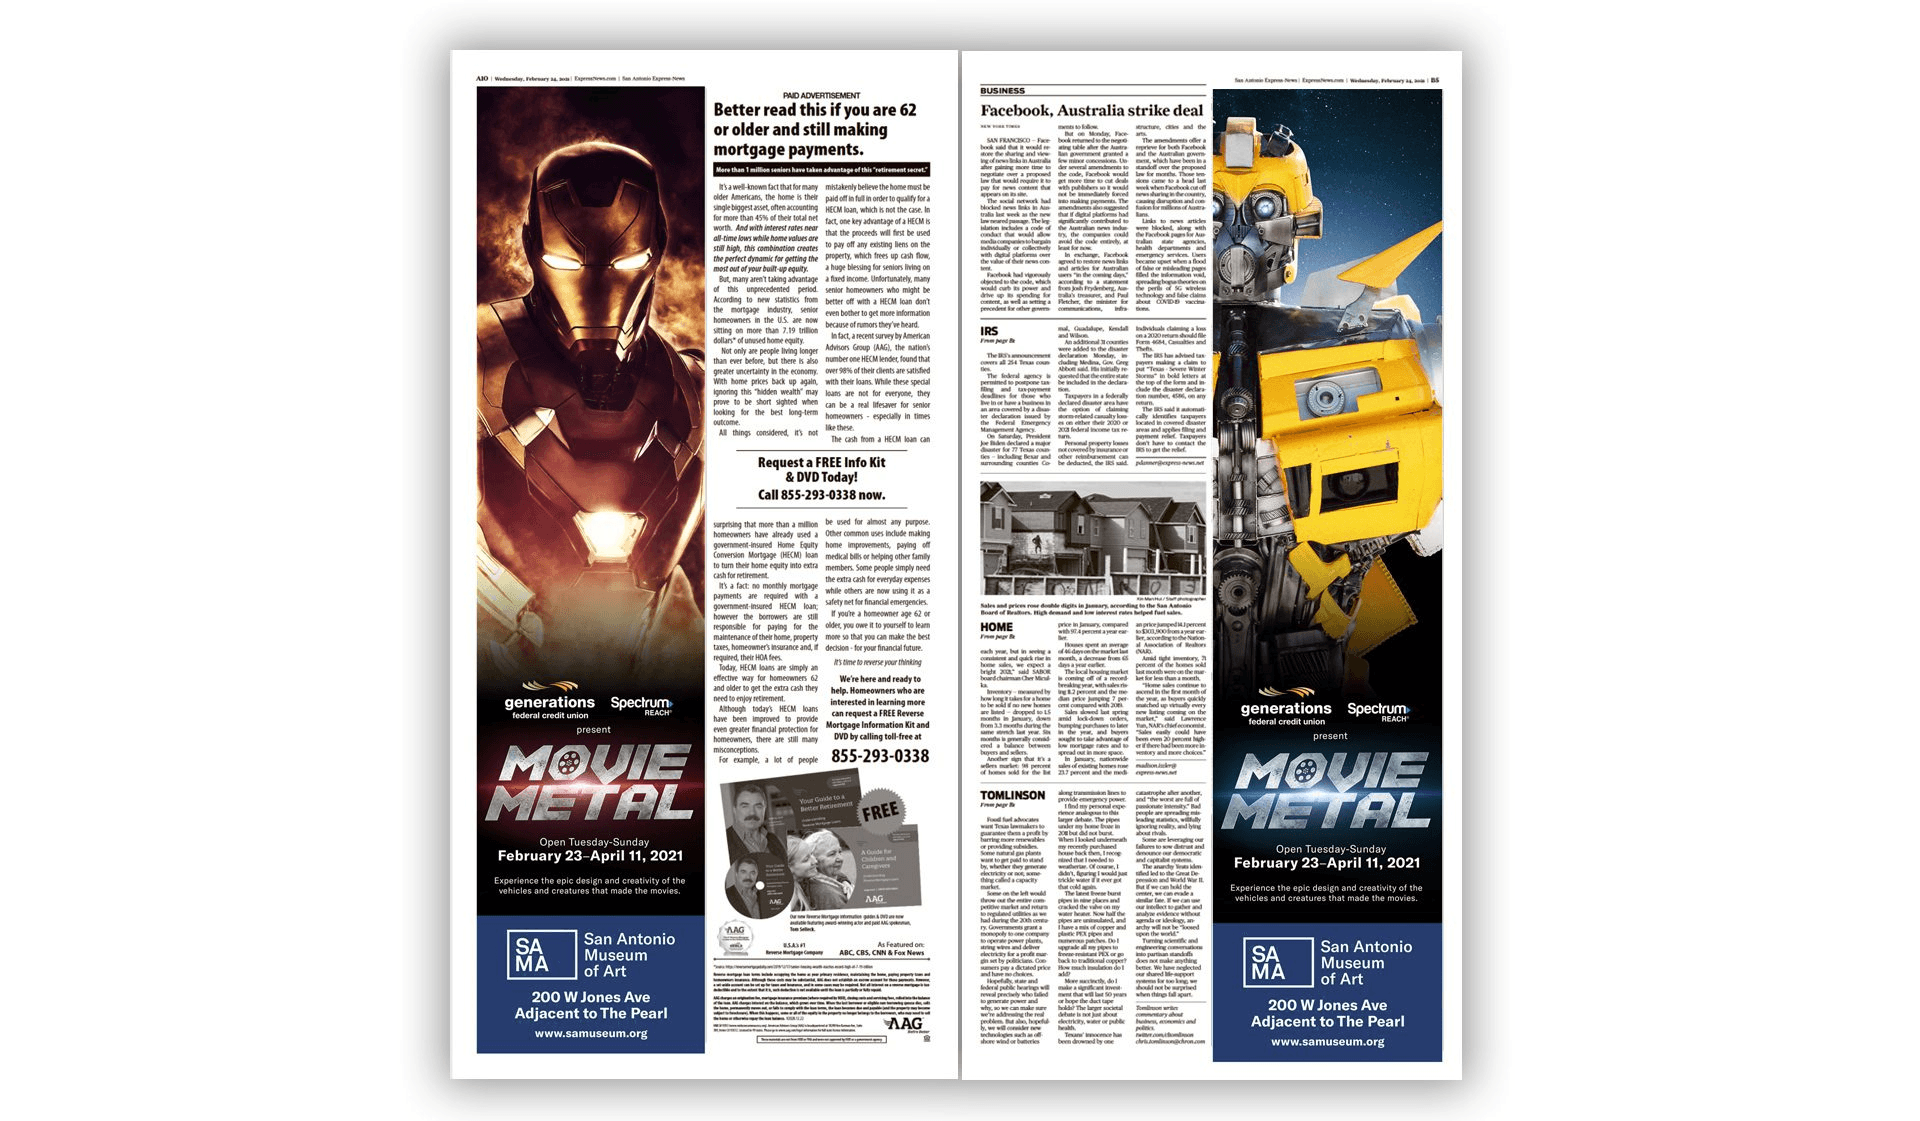 Movie Metal Exhibit Print Ads